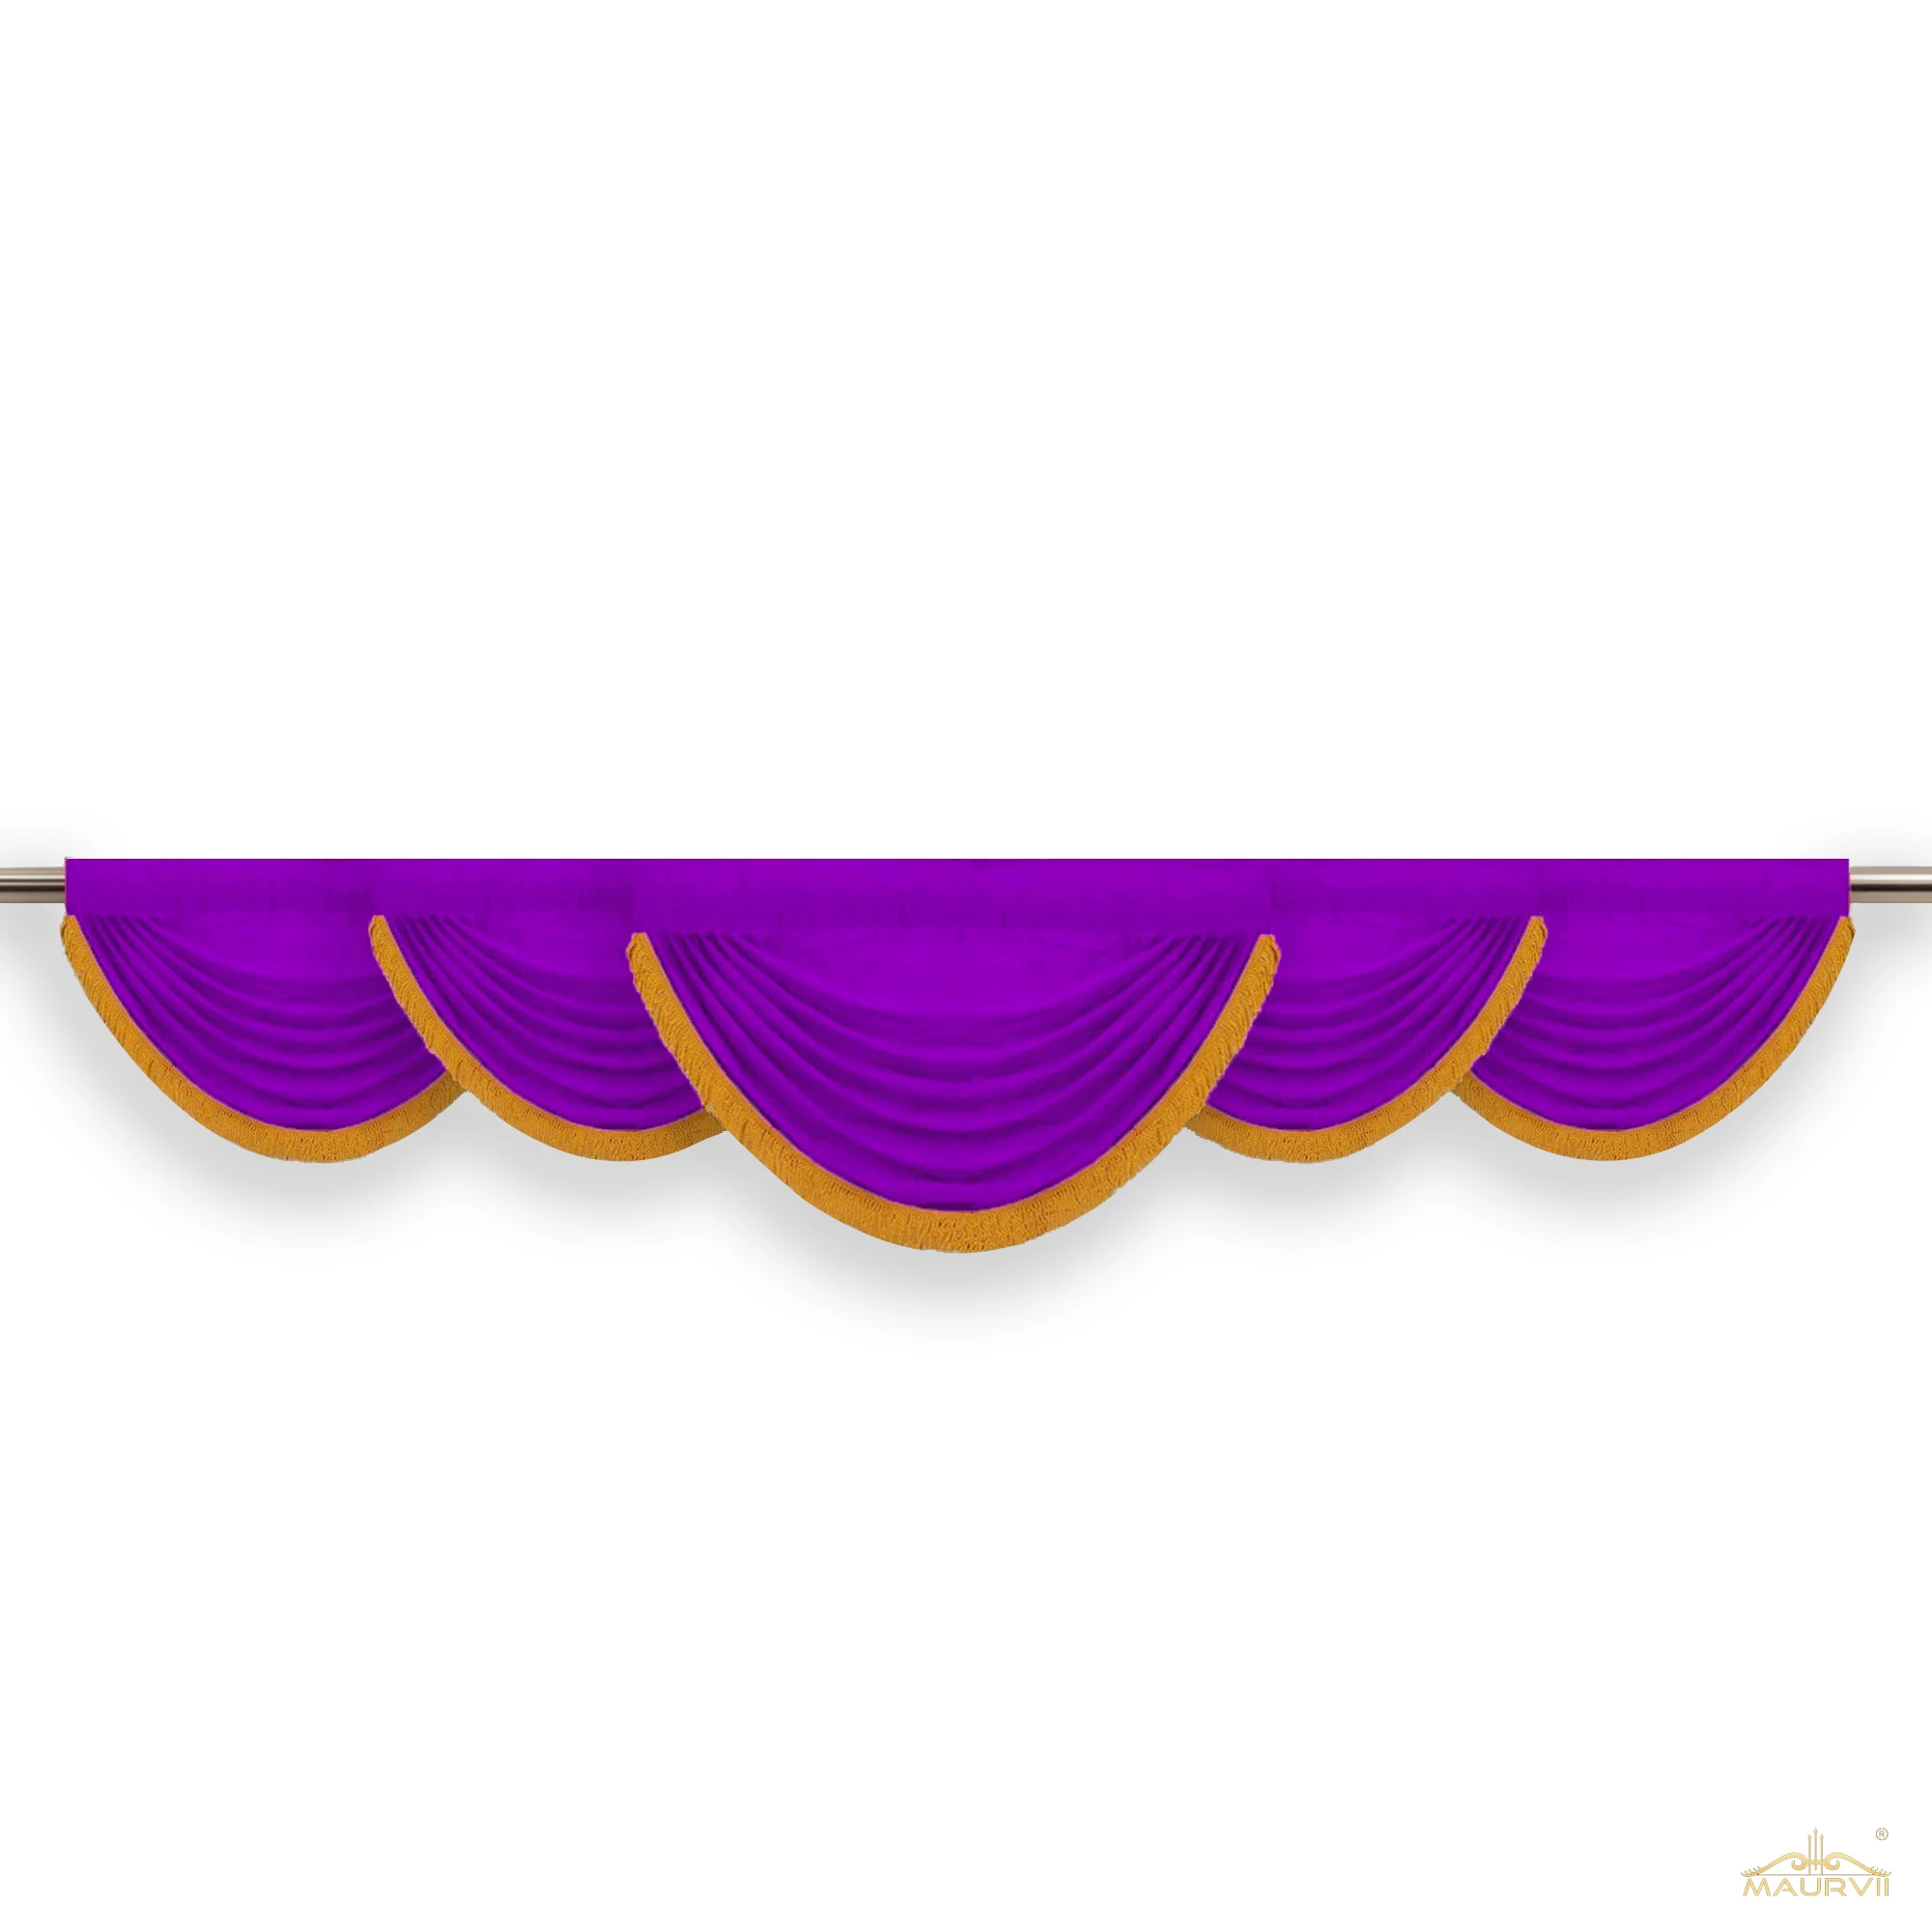 Decorative purple velvet curtains